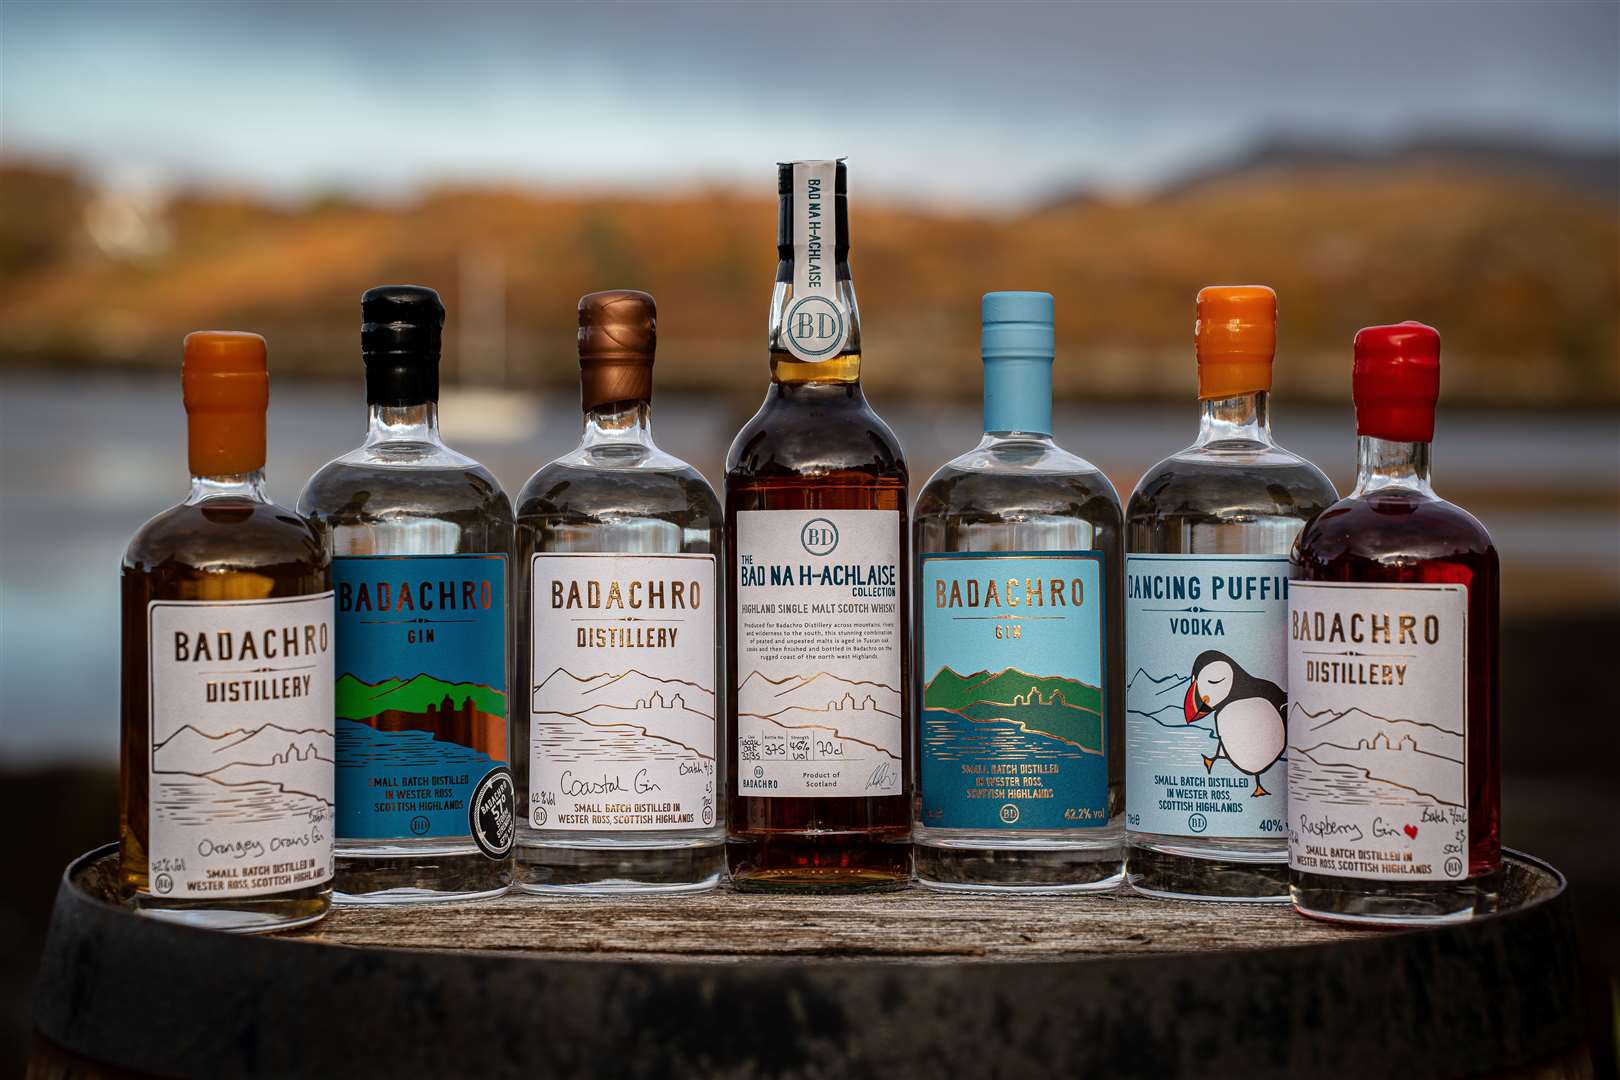 The Badachro Distillery range of spirits.